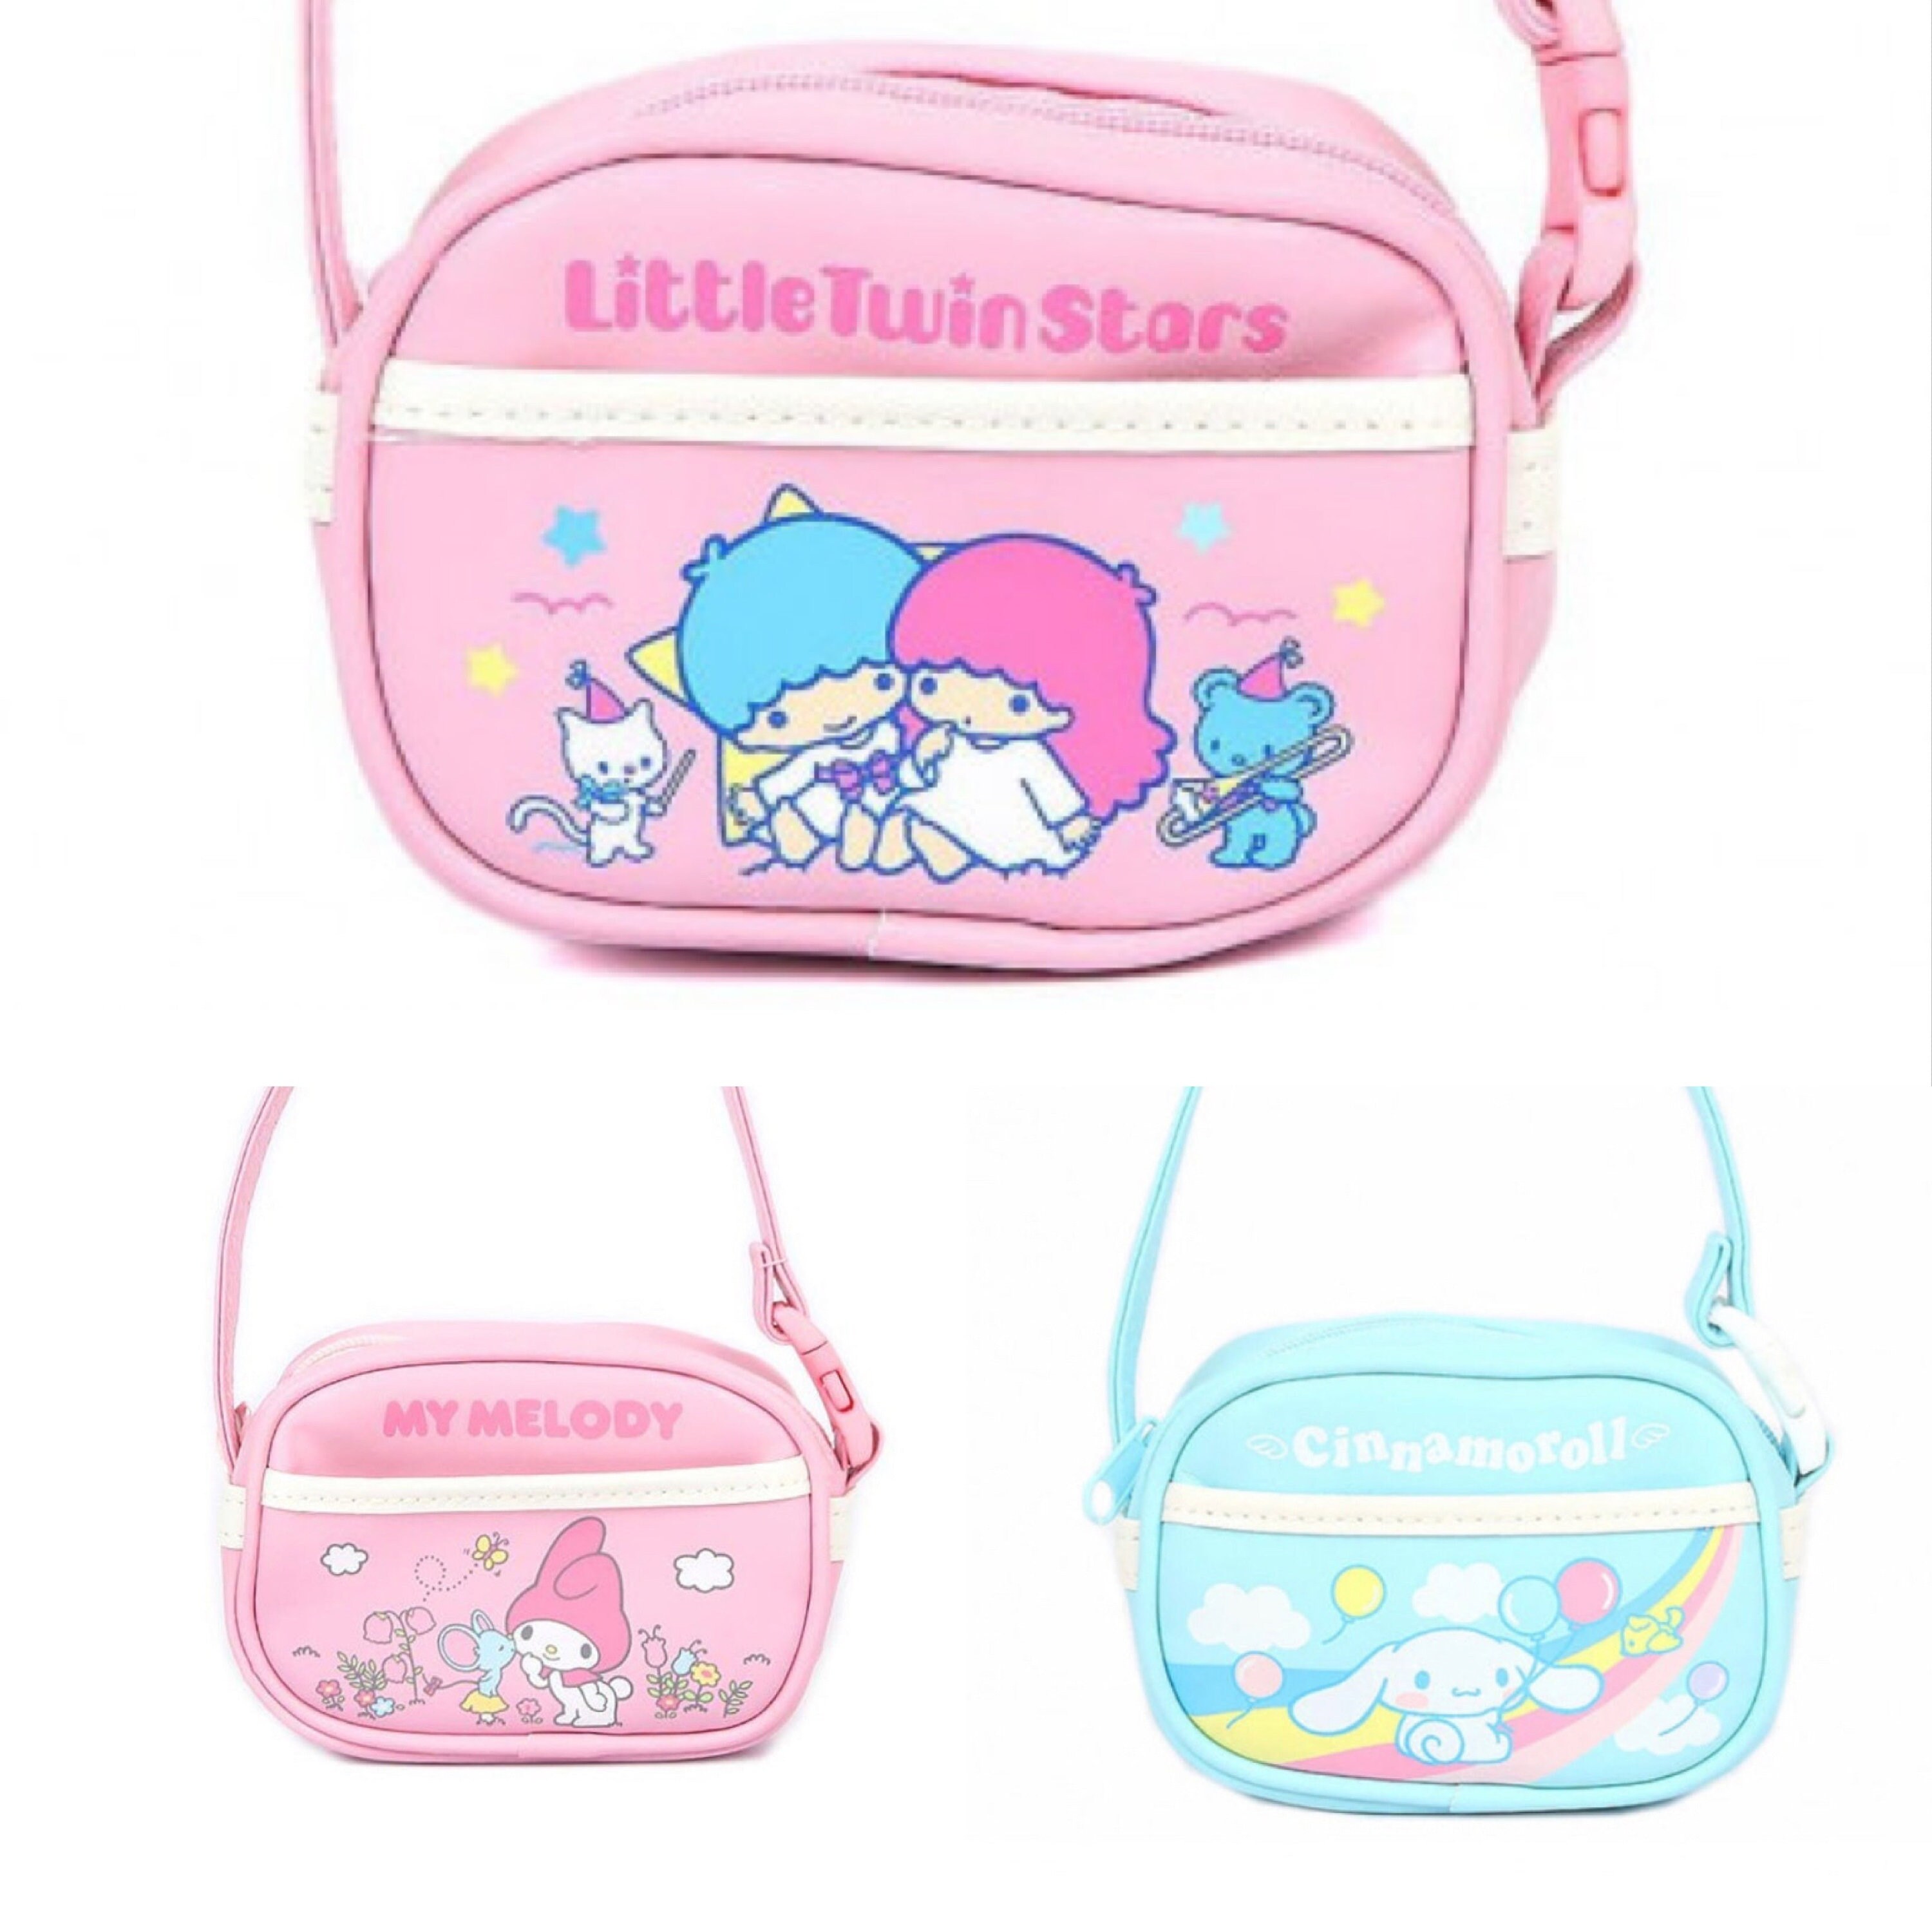 My melody little twin stars easter gift coin bag handbag money makeup bags cute 